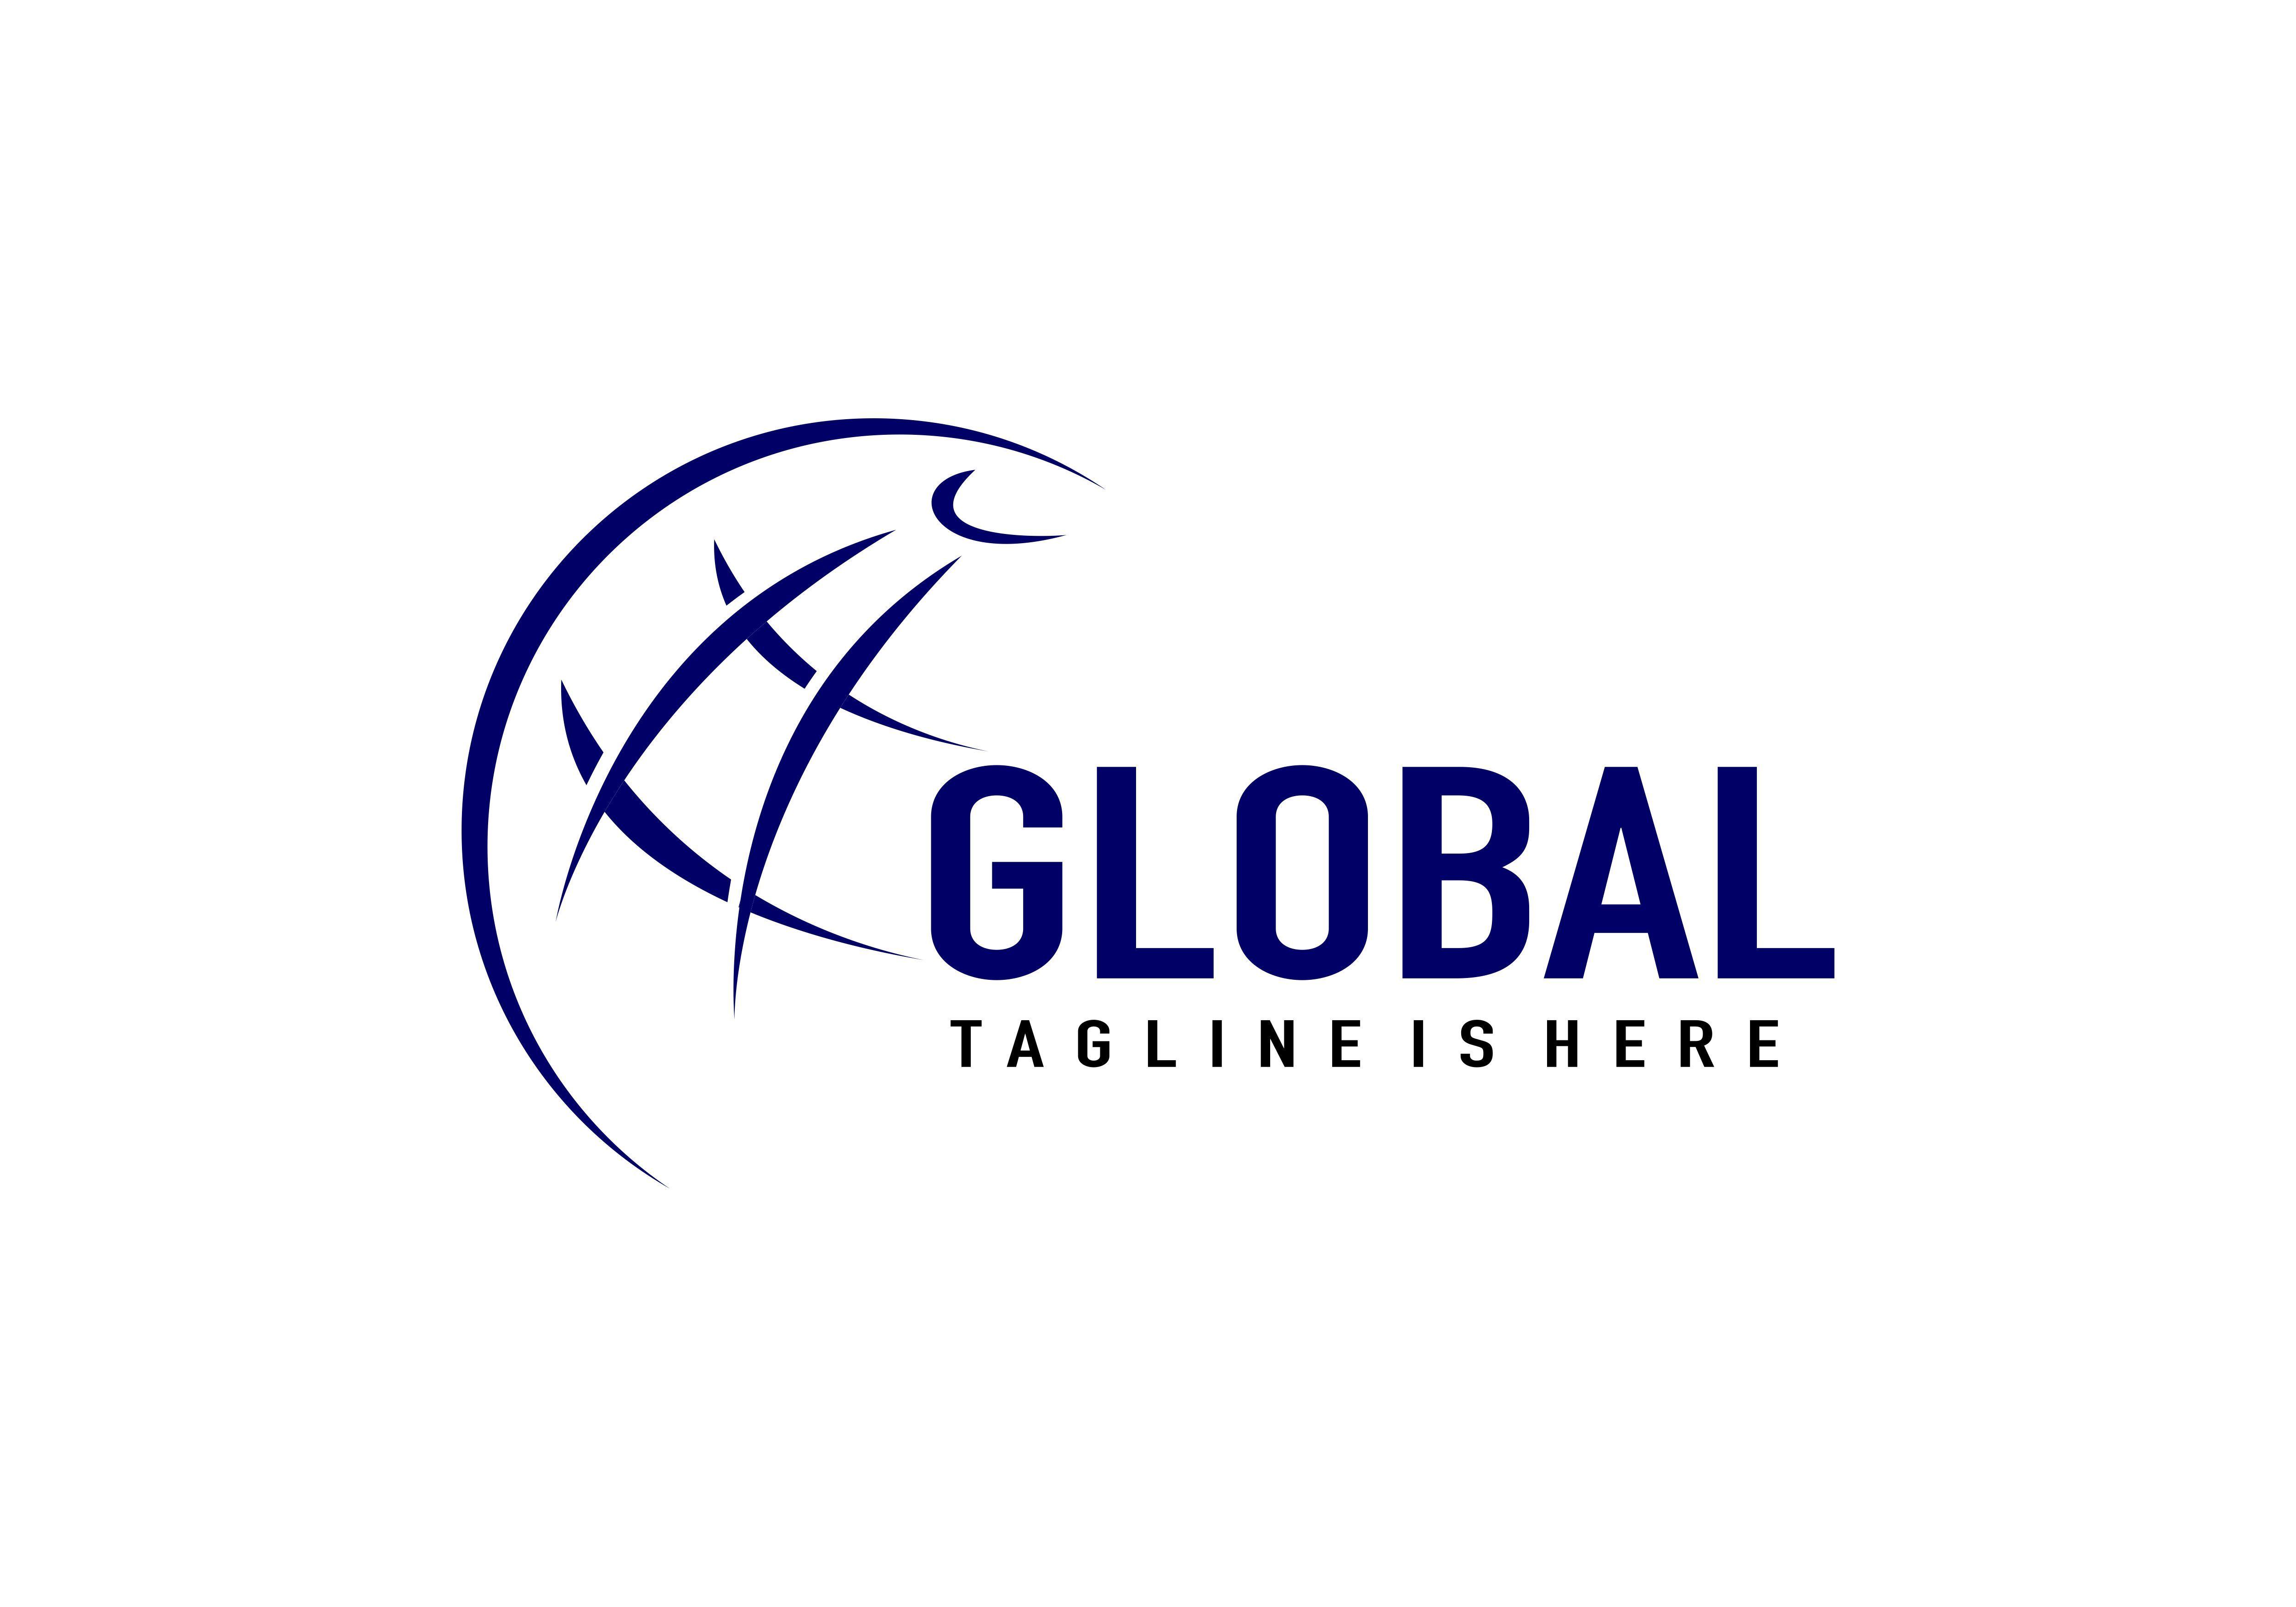 Global Business Logo - Global, business logo Graphic by DEEMKA STUDIO - Creative Fabrica